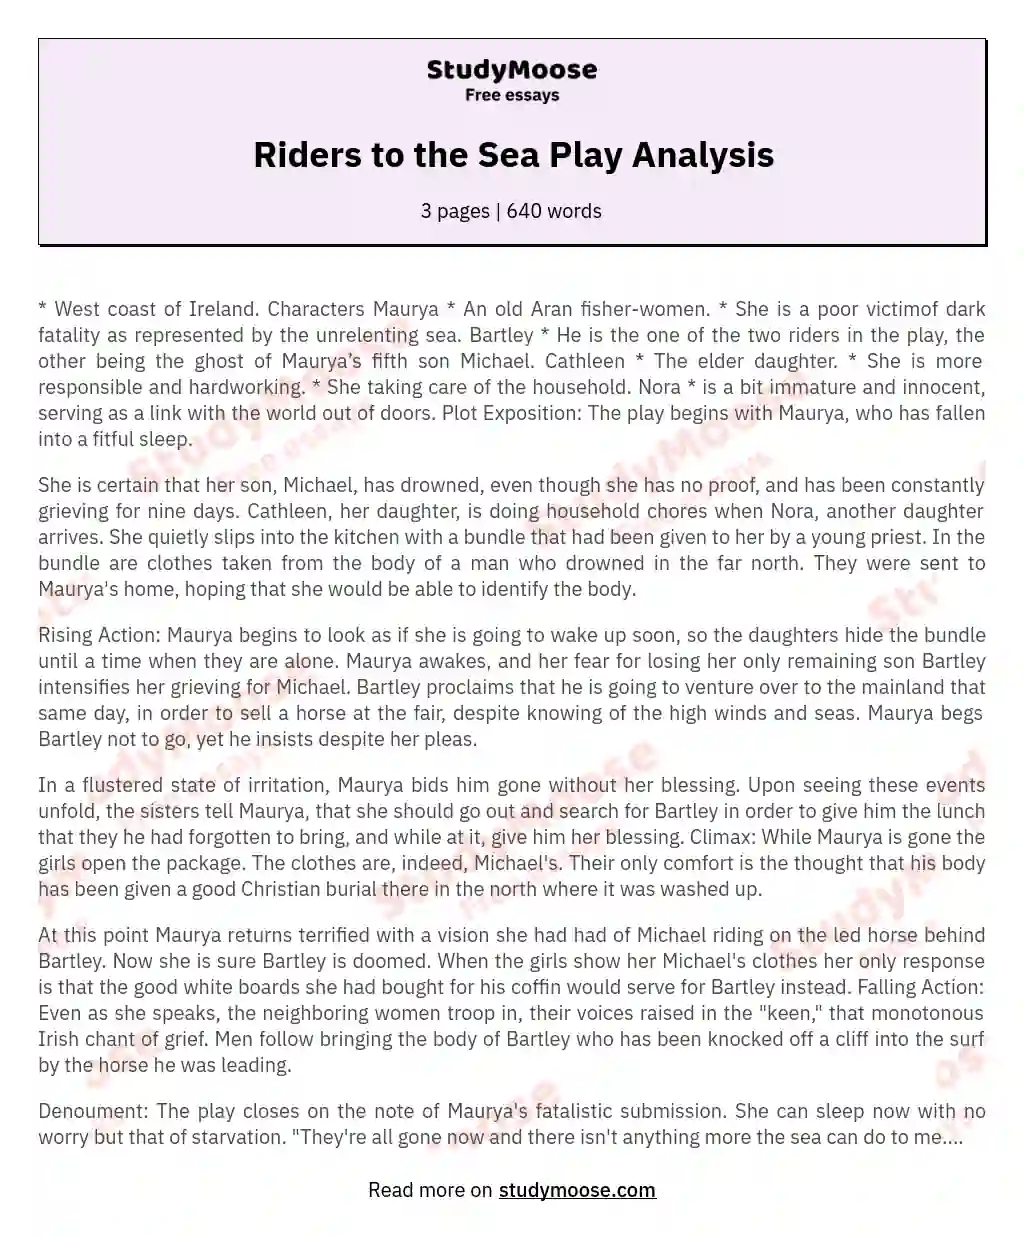 Riders to the Sea Play Analysis essay